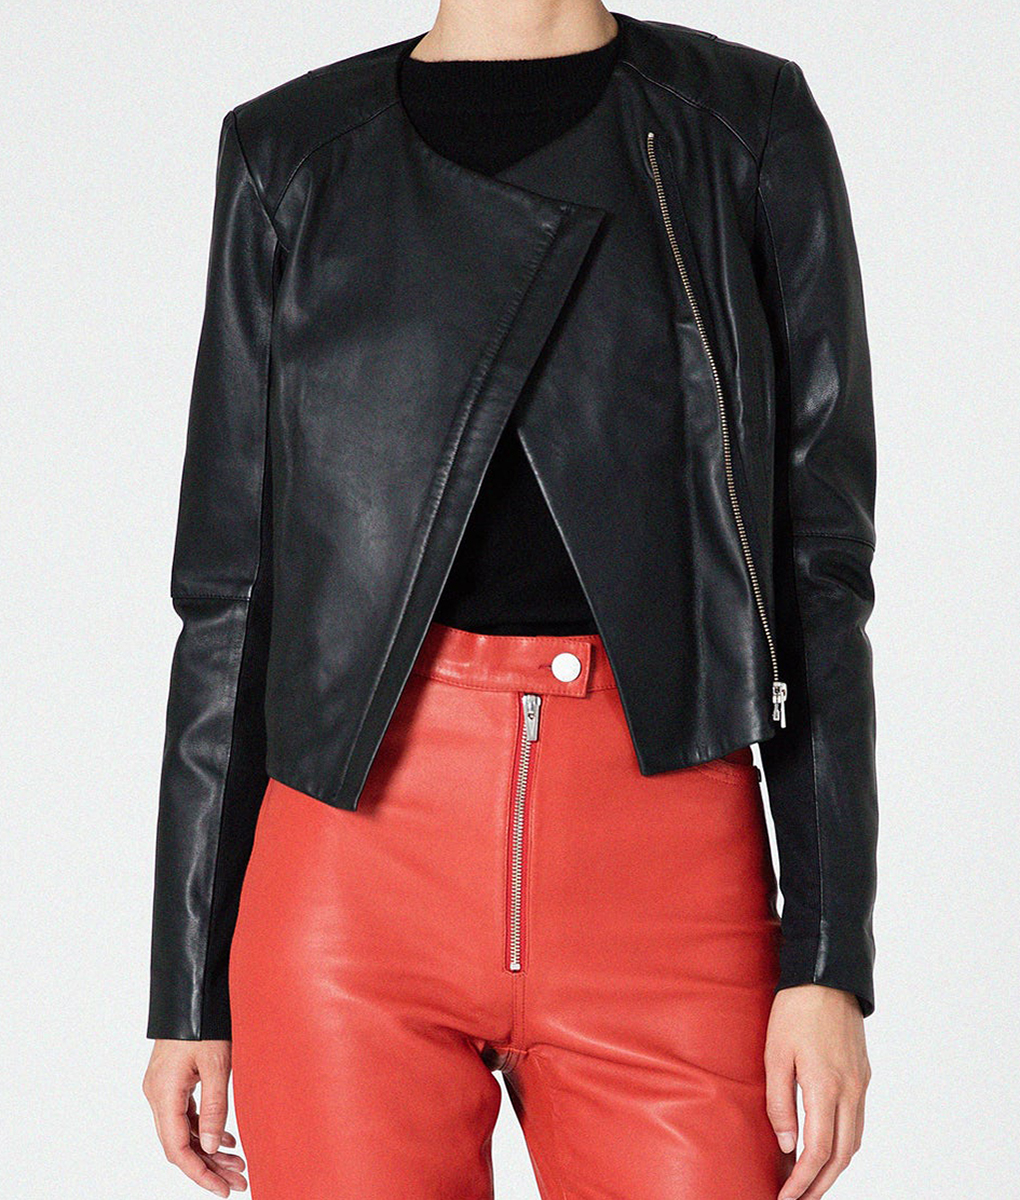 Pamela Adlon Better Things Black Leather Jacket (3)